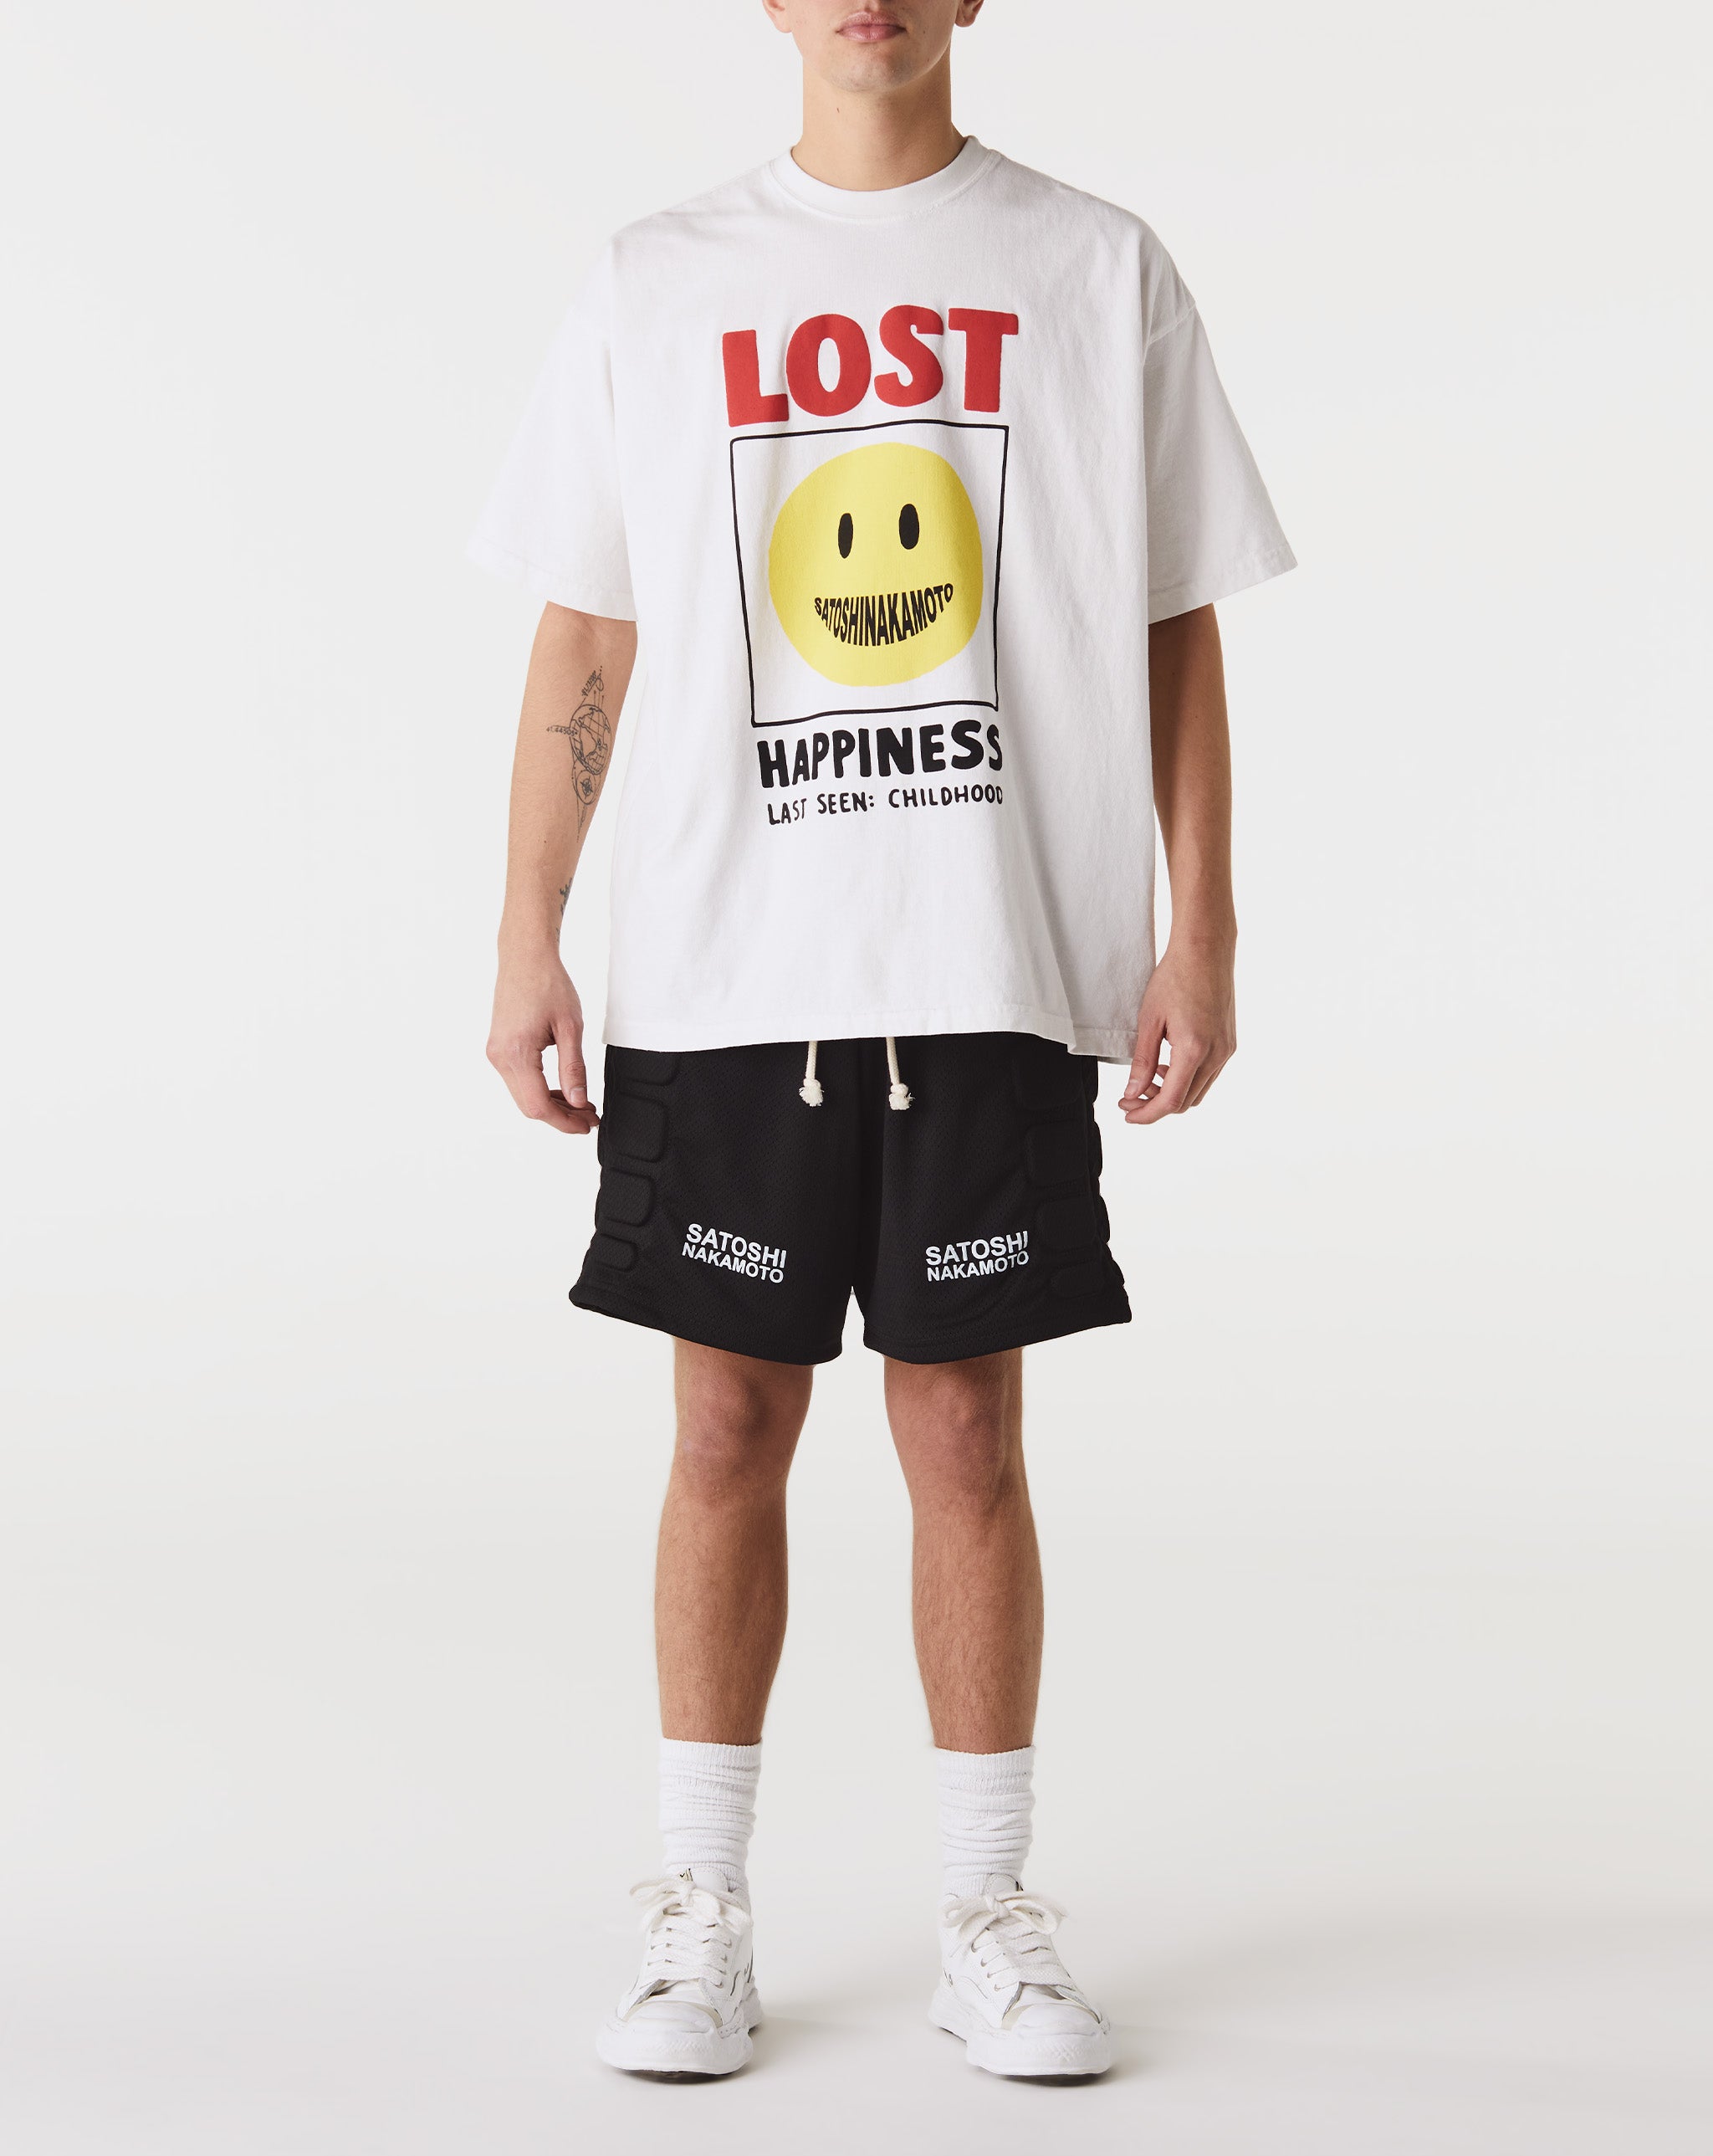 Satoshi Nakamoto Lost Happiness T-Shirt  - XHIBITION